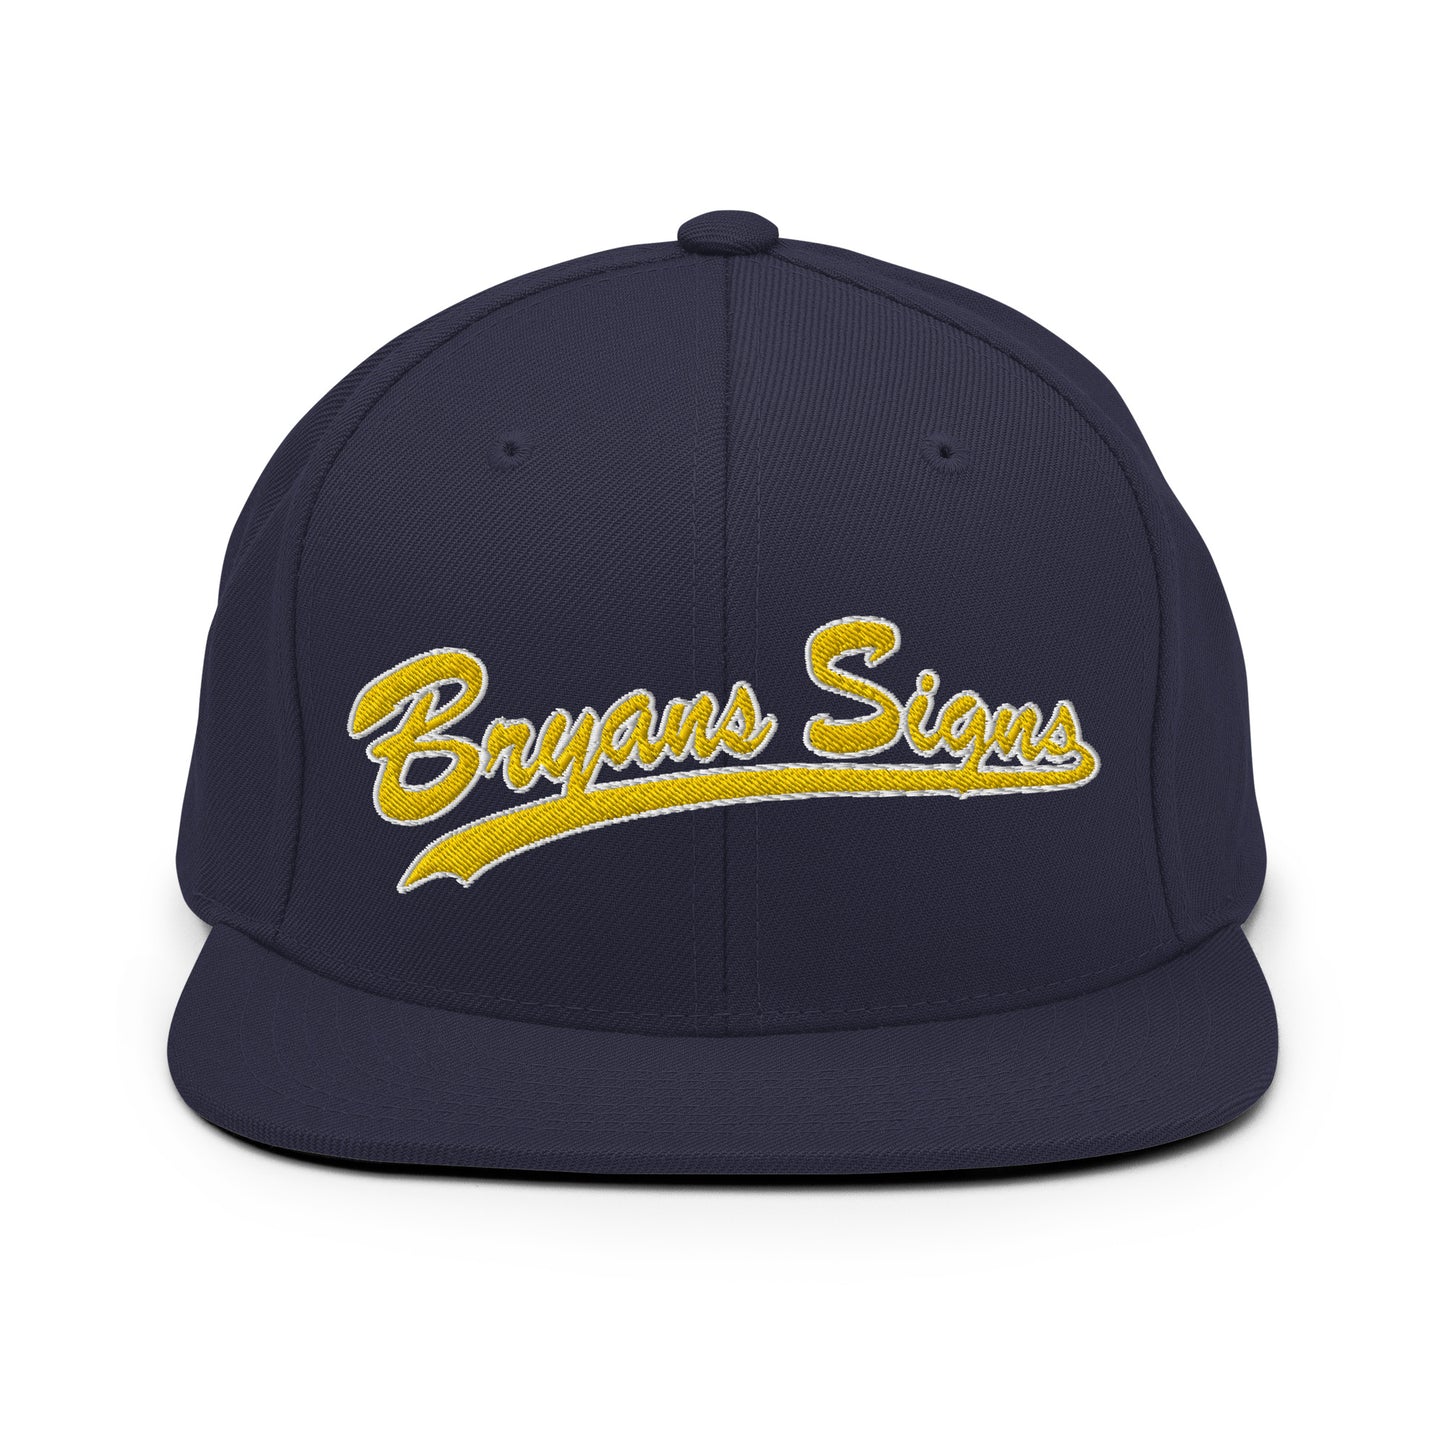 Bryan's Signs Snapback Hat